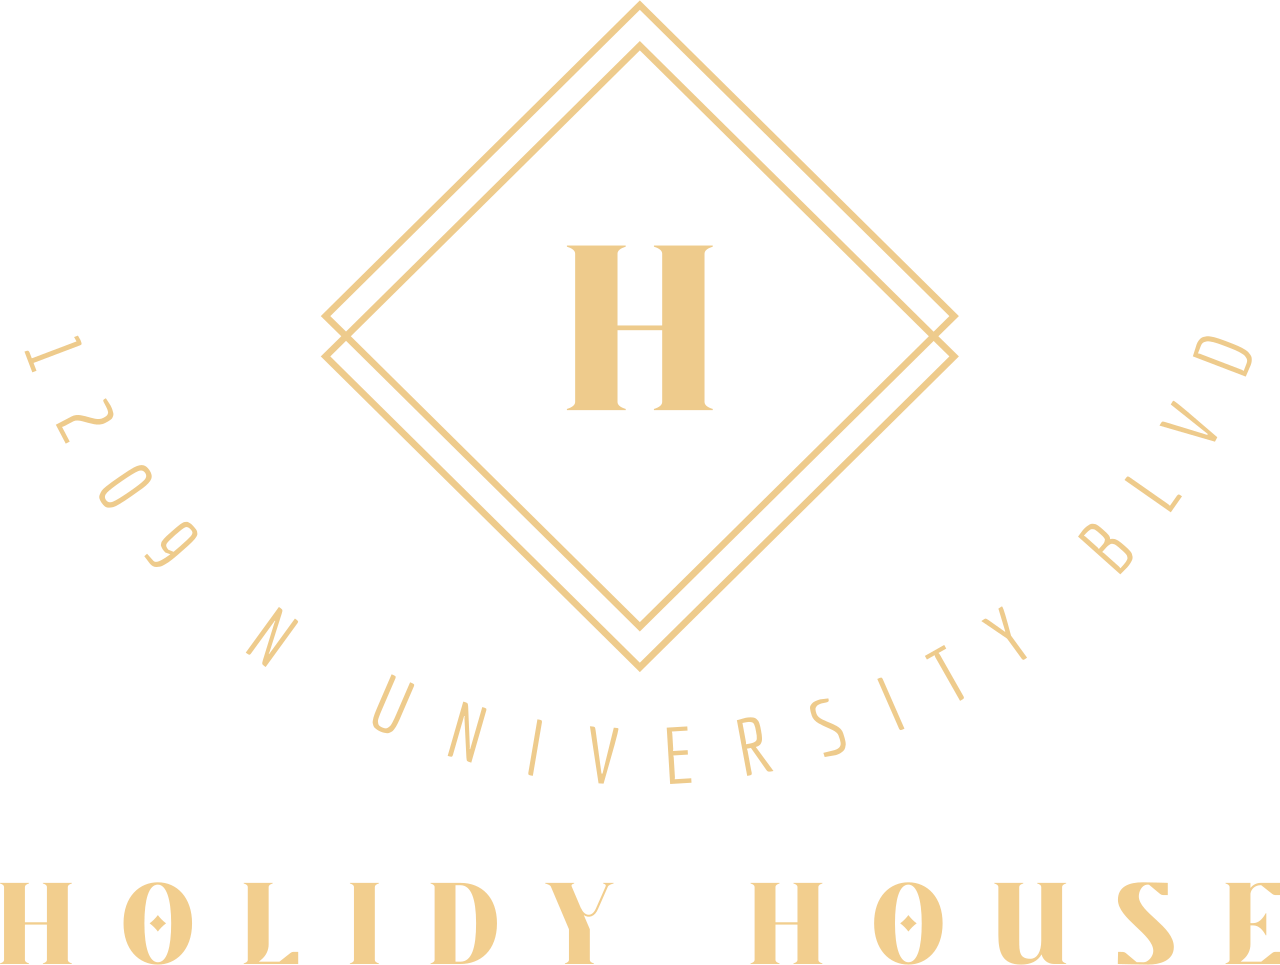 Holidy House's logo